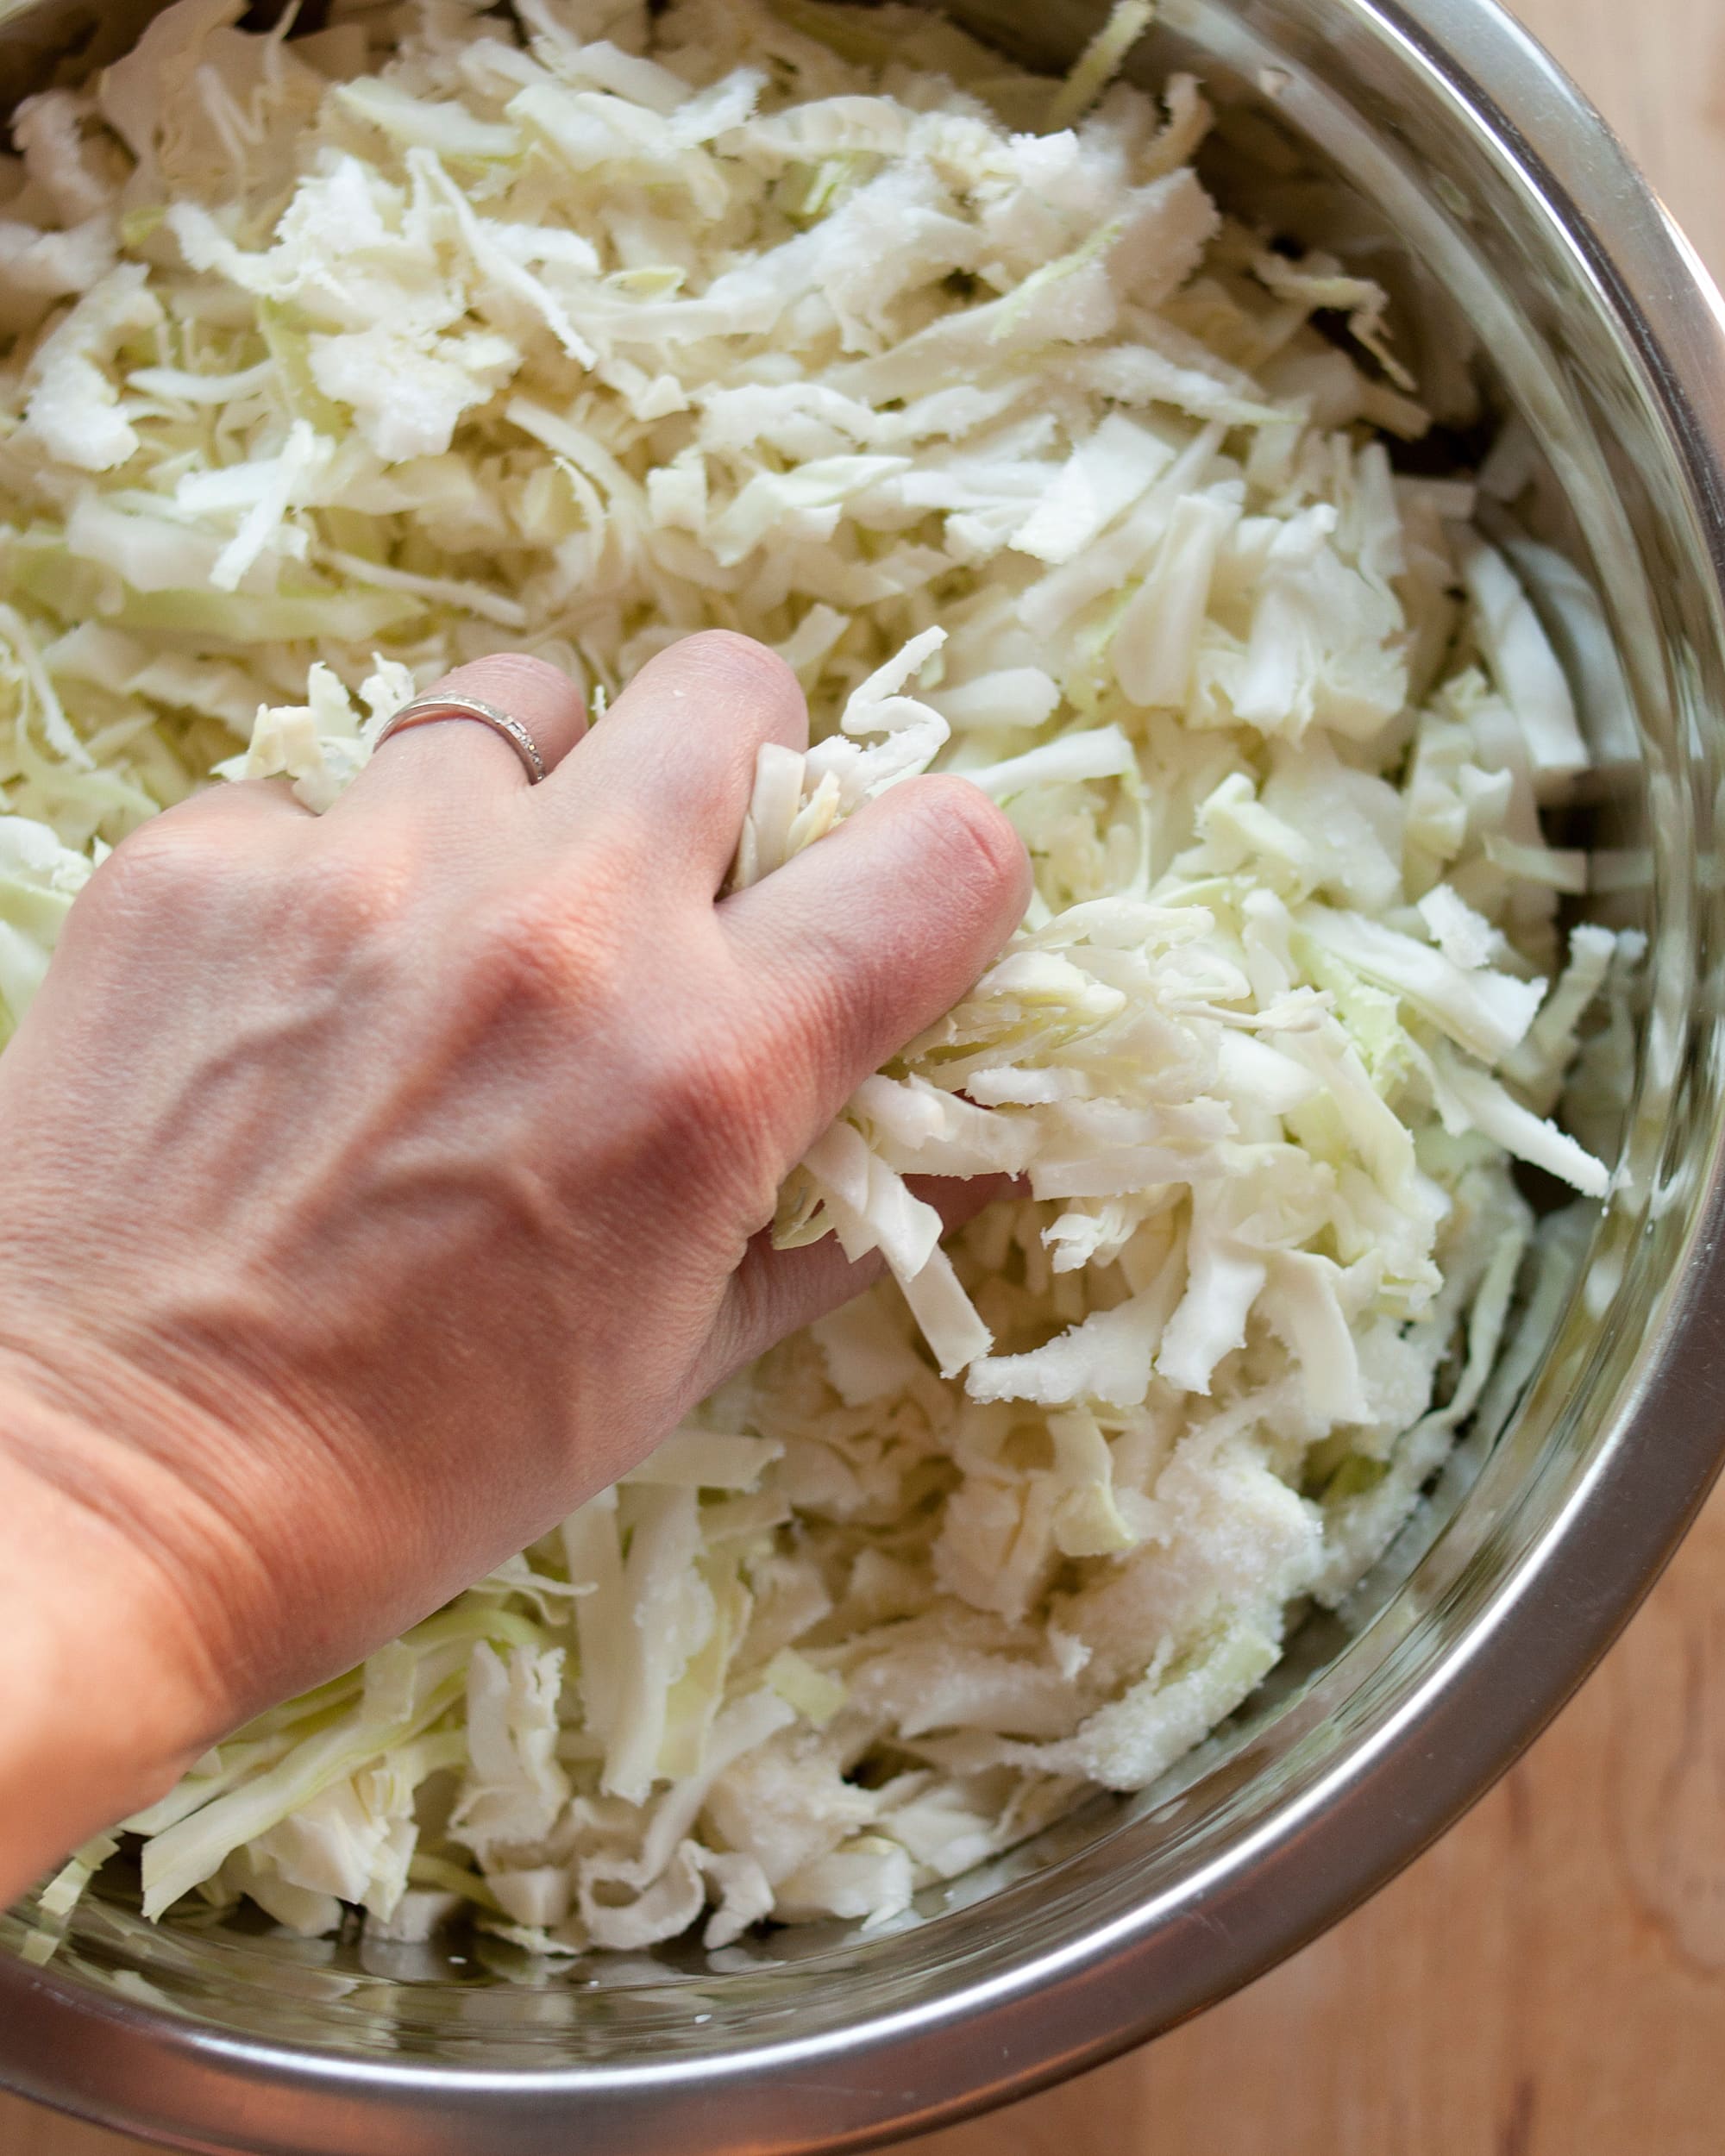 How To Make Homemade Sauerkraut in a Mason Jar | Kitchn